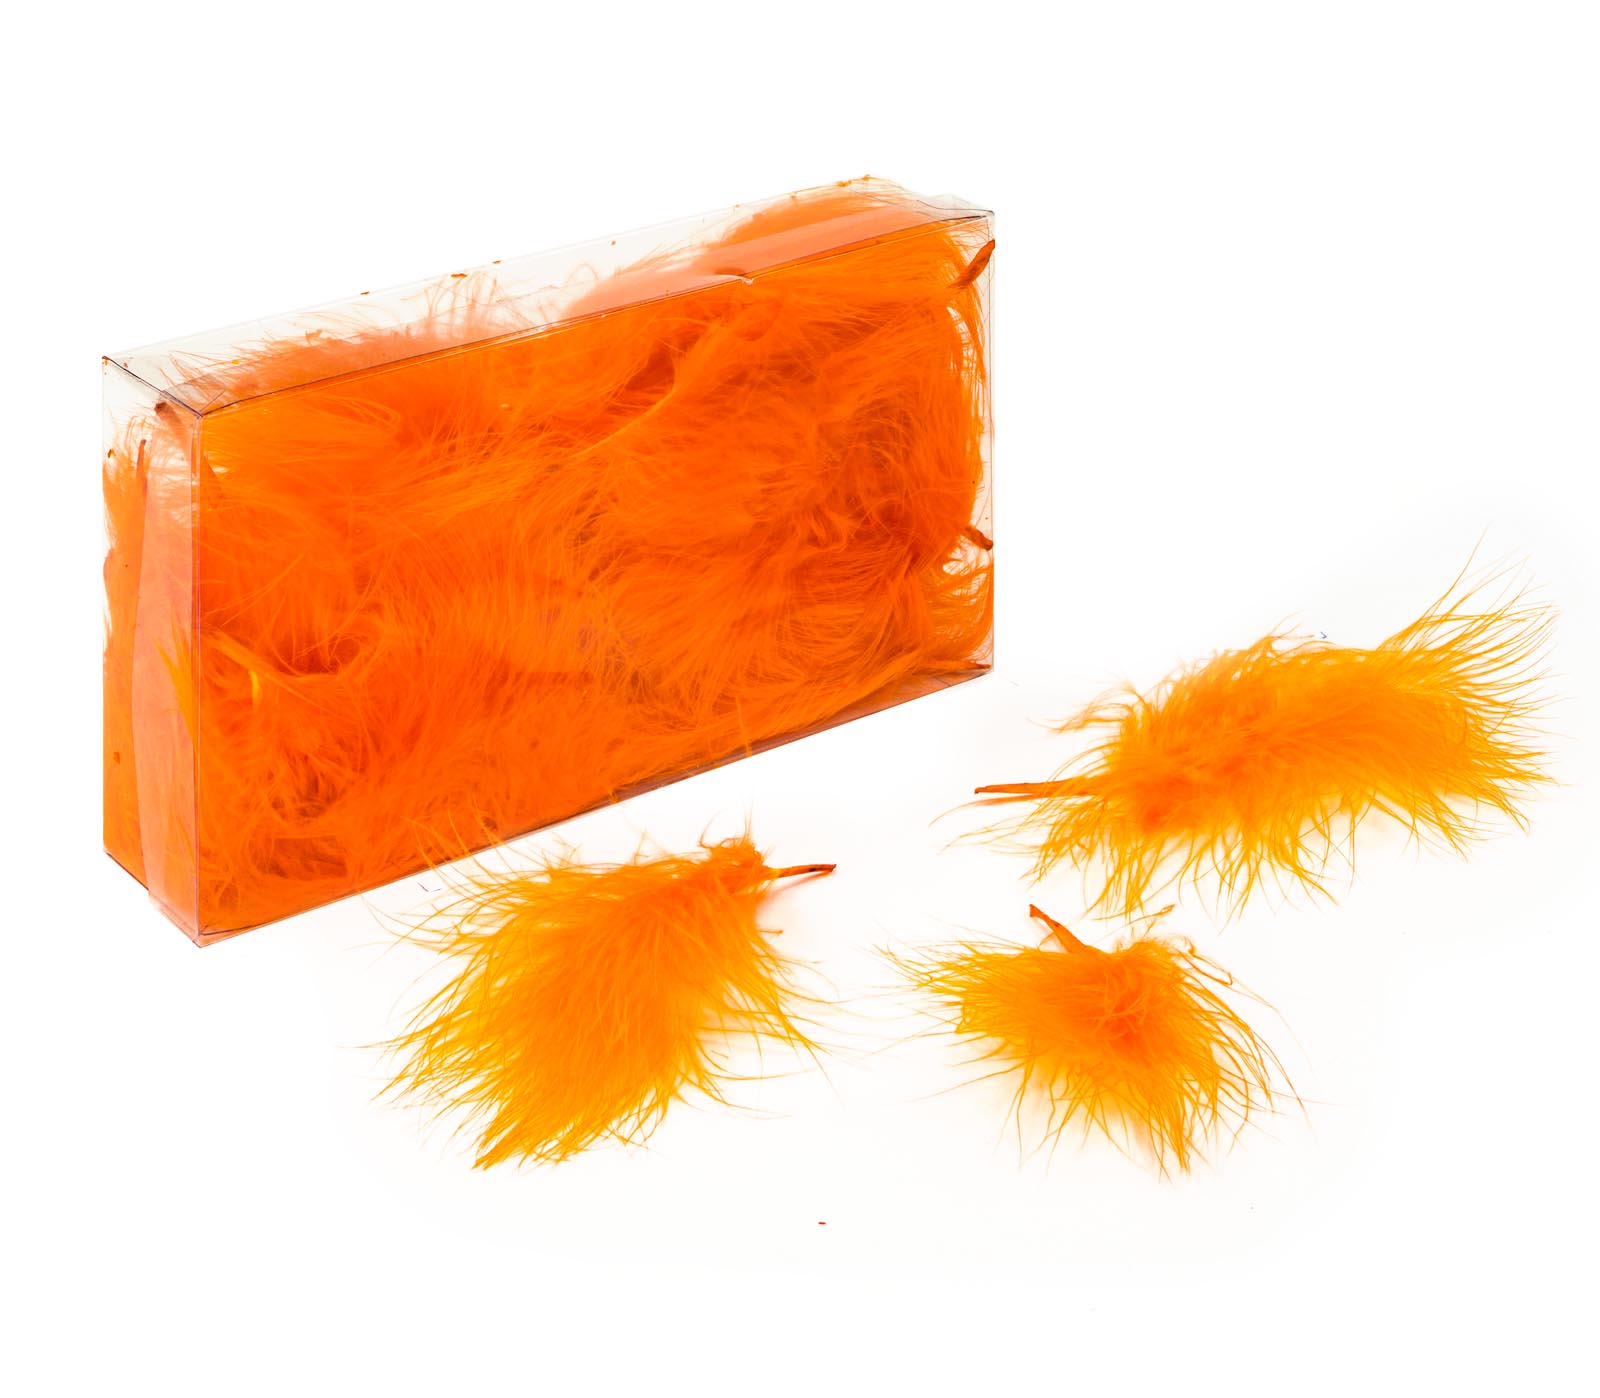 Marabufedern lose, 8g/Box (ca. 50 Stück), Orange